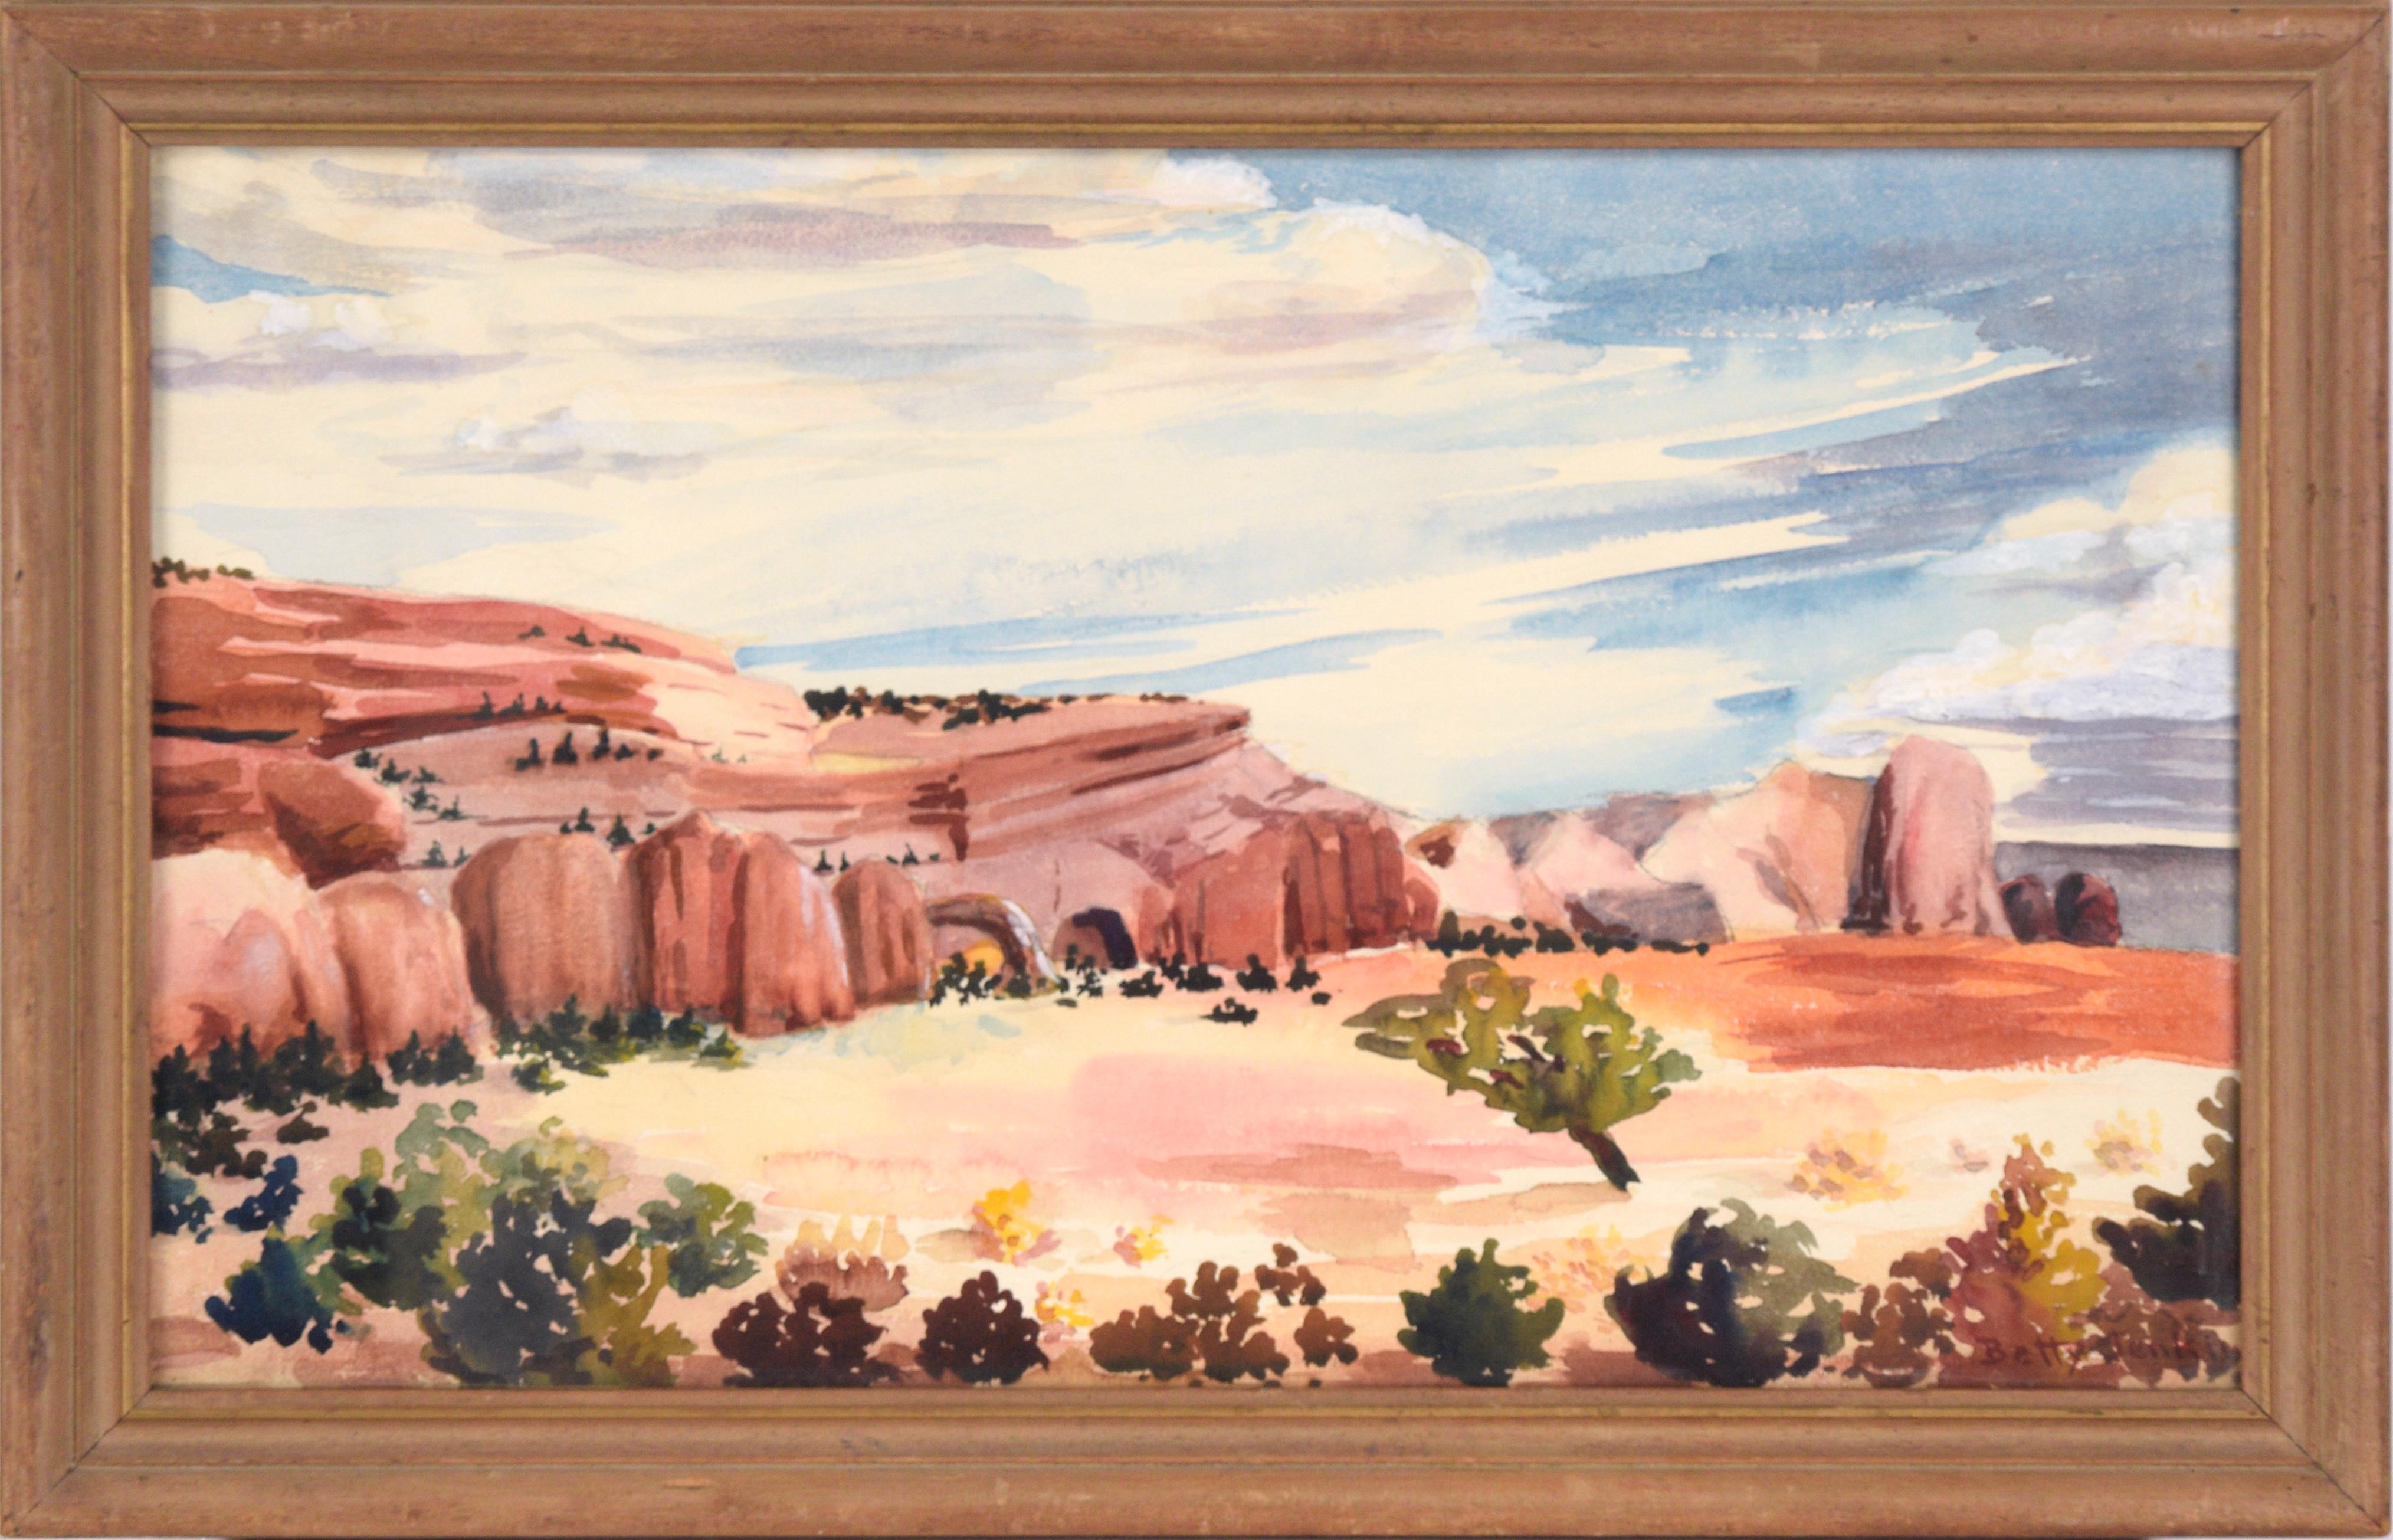 Betty Jenkins Landscape Art - "Red Rock Country" - Desert Landscape